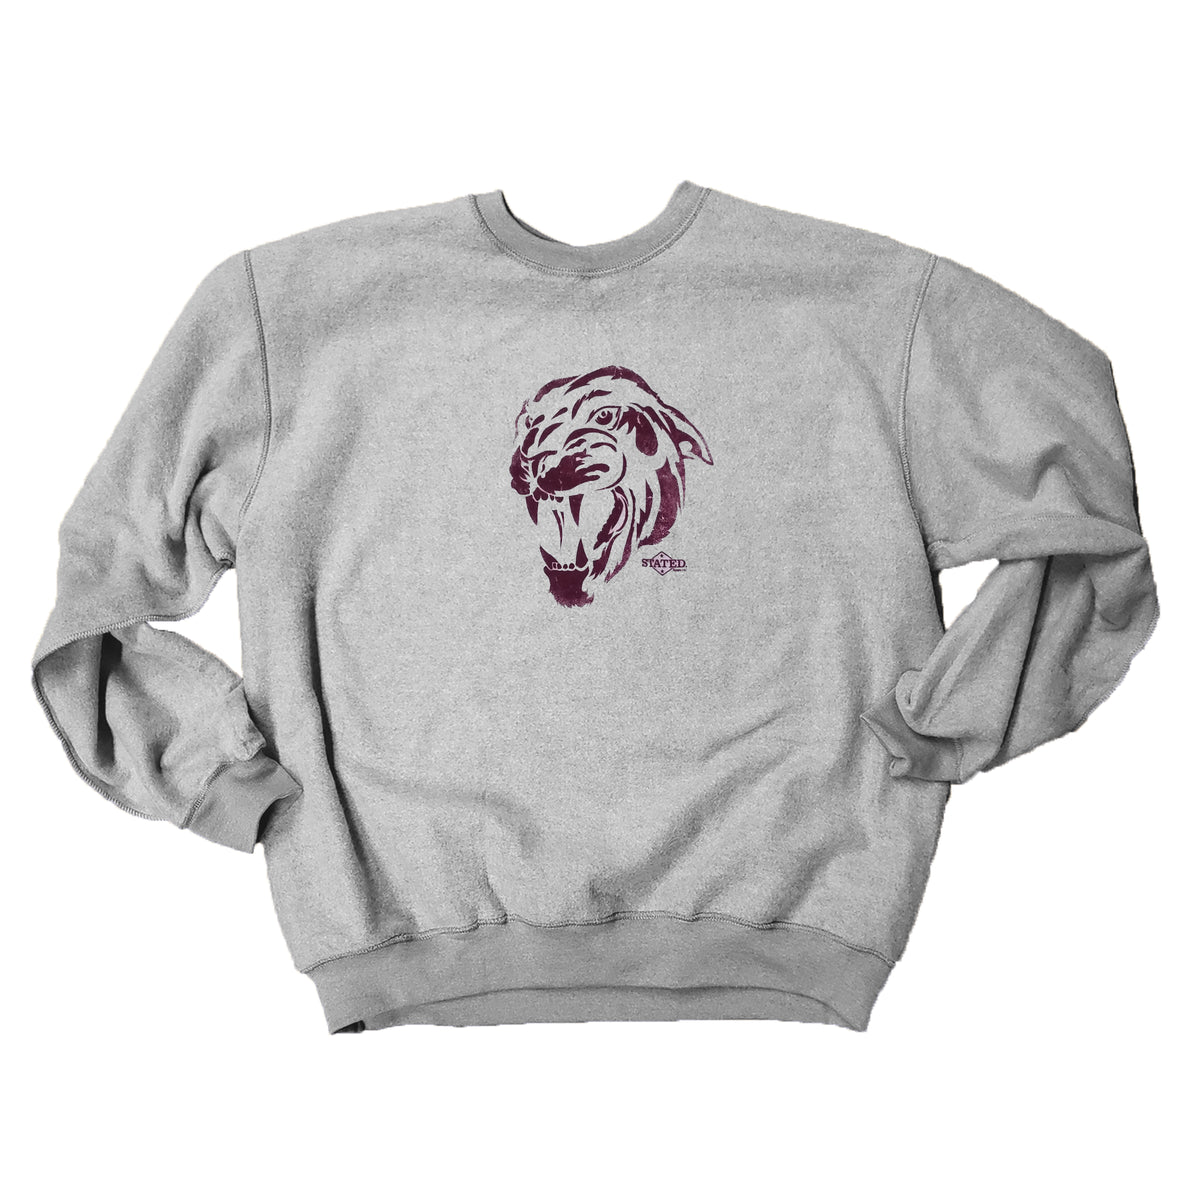 Benton Mascot inverted sweatshirt